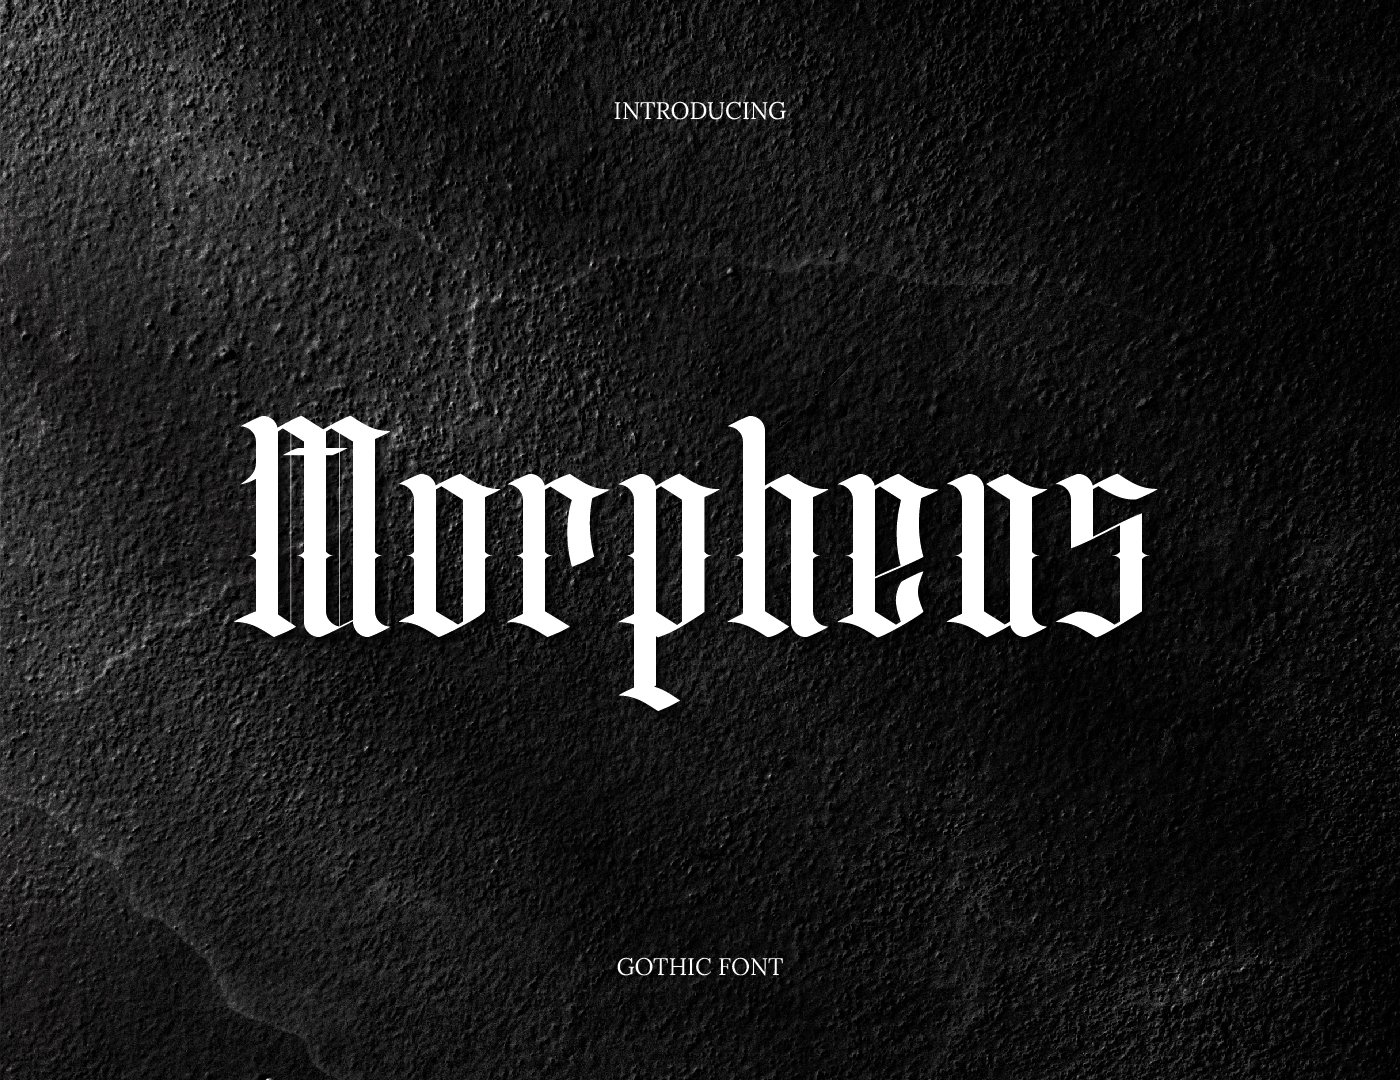 Morpheus Blackletter Typeface cover image.